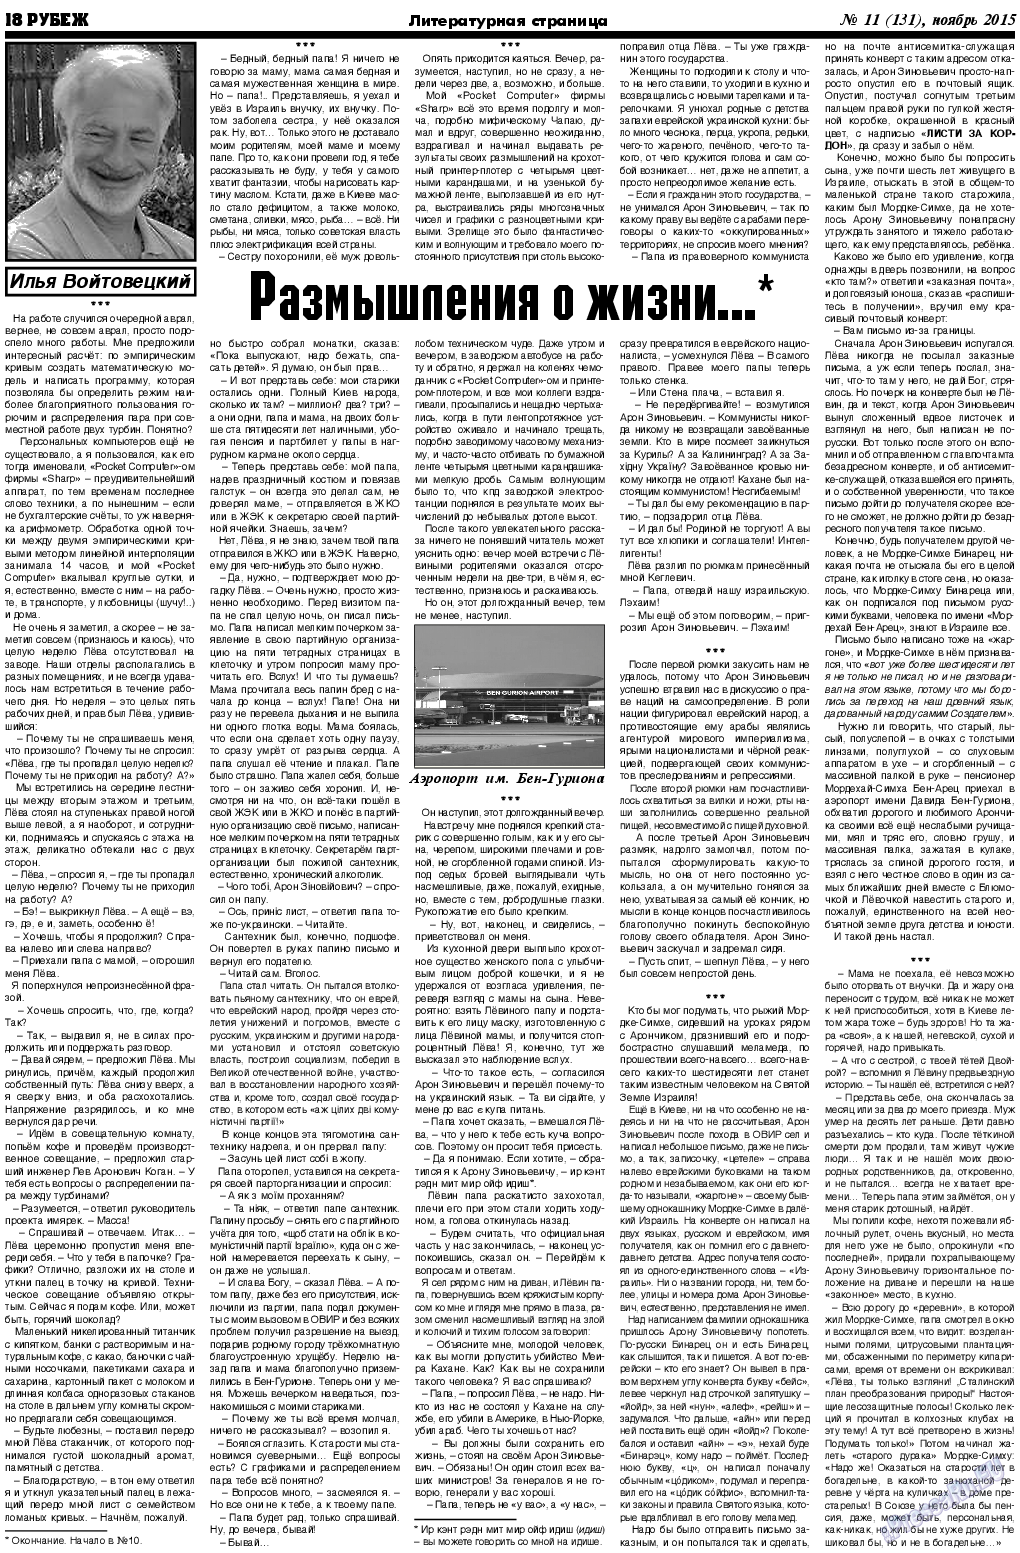 Рубеж, газета. 2015 №11 стр.18